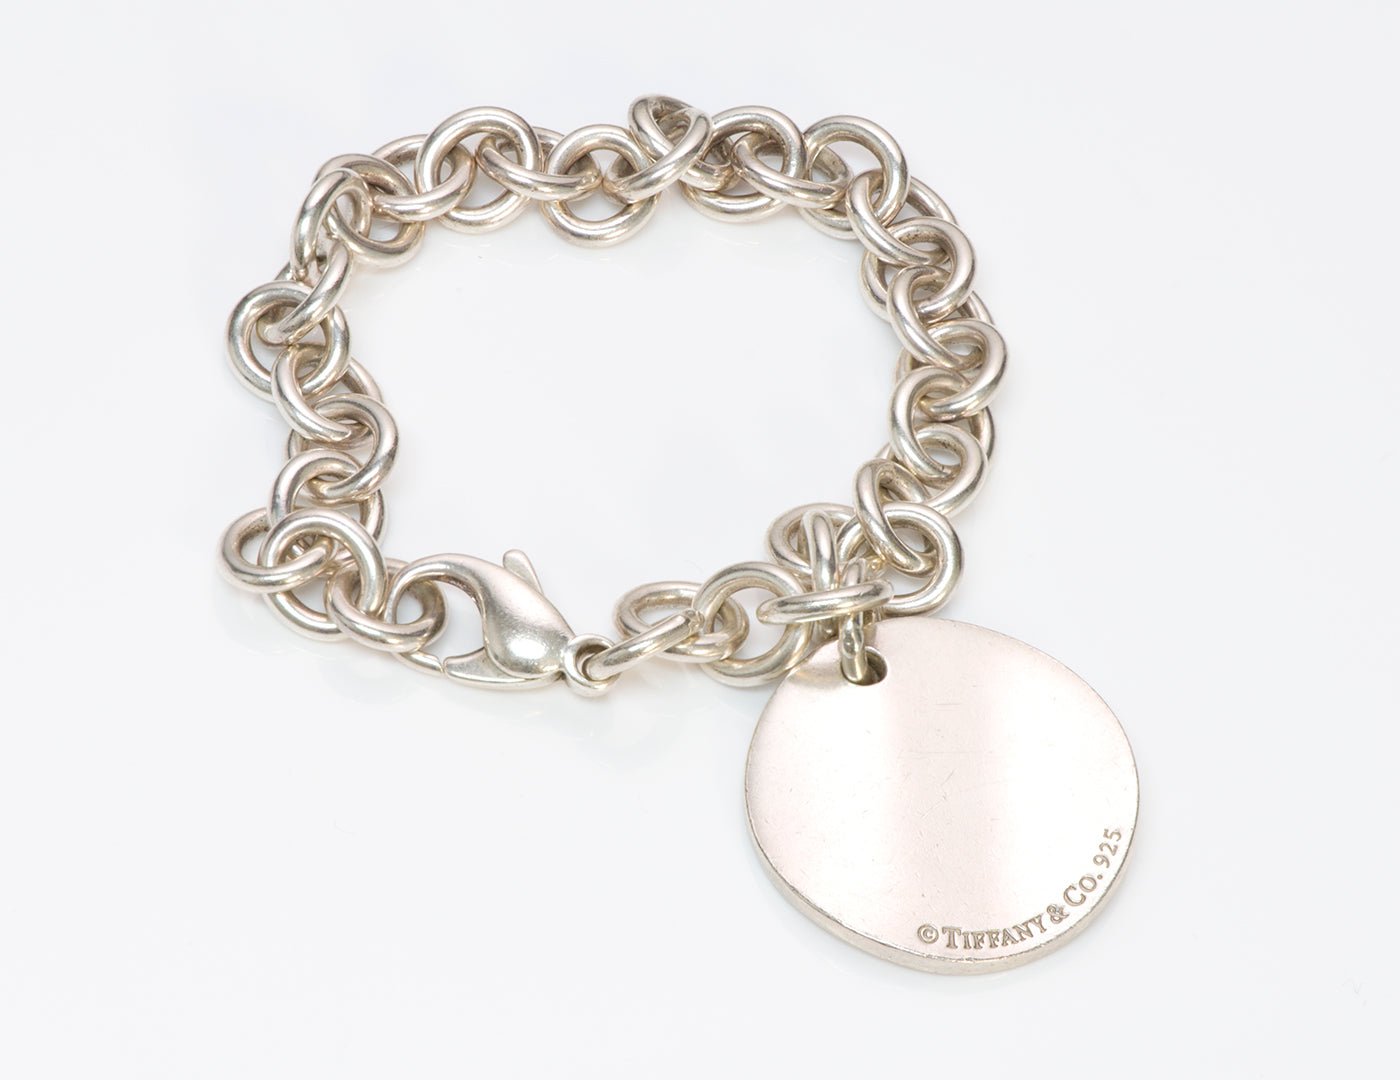 Tiffany u0026 Co. Fifth Ave 727 Silver Charm Bracelet